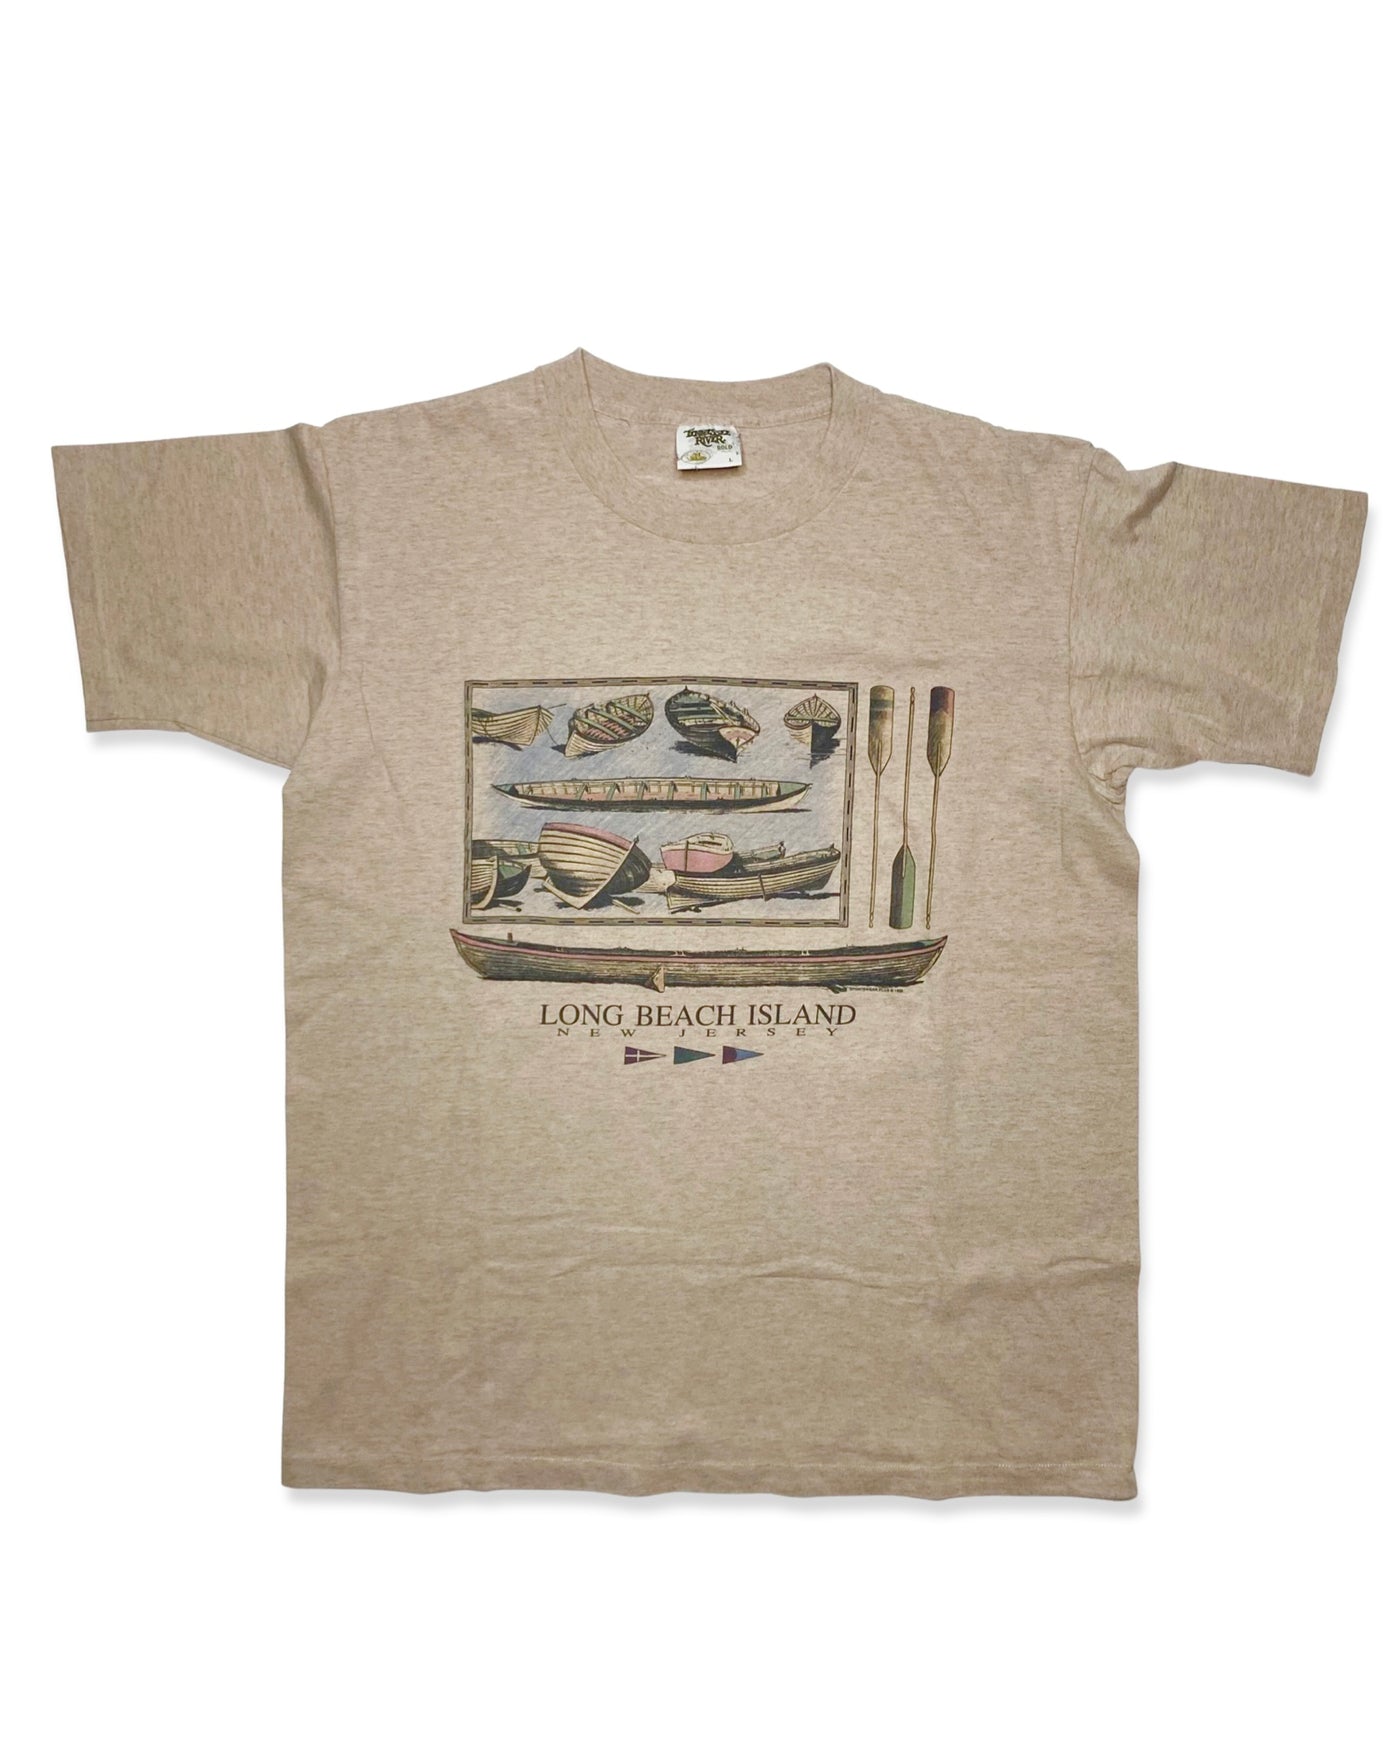 Vintage 1996 Long Beach Island Location T-Shirt